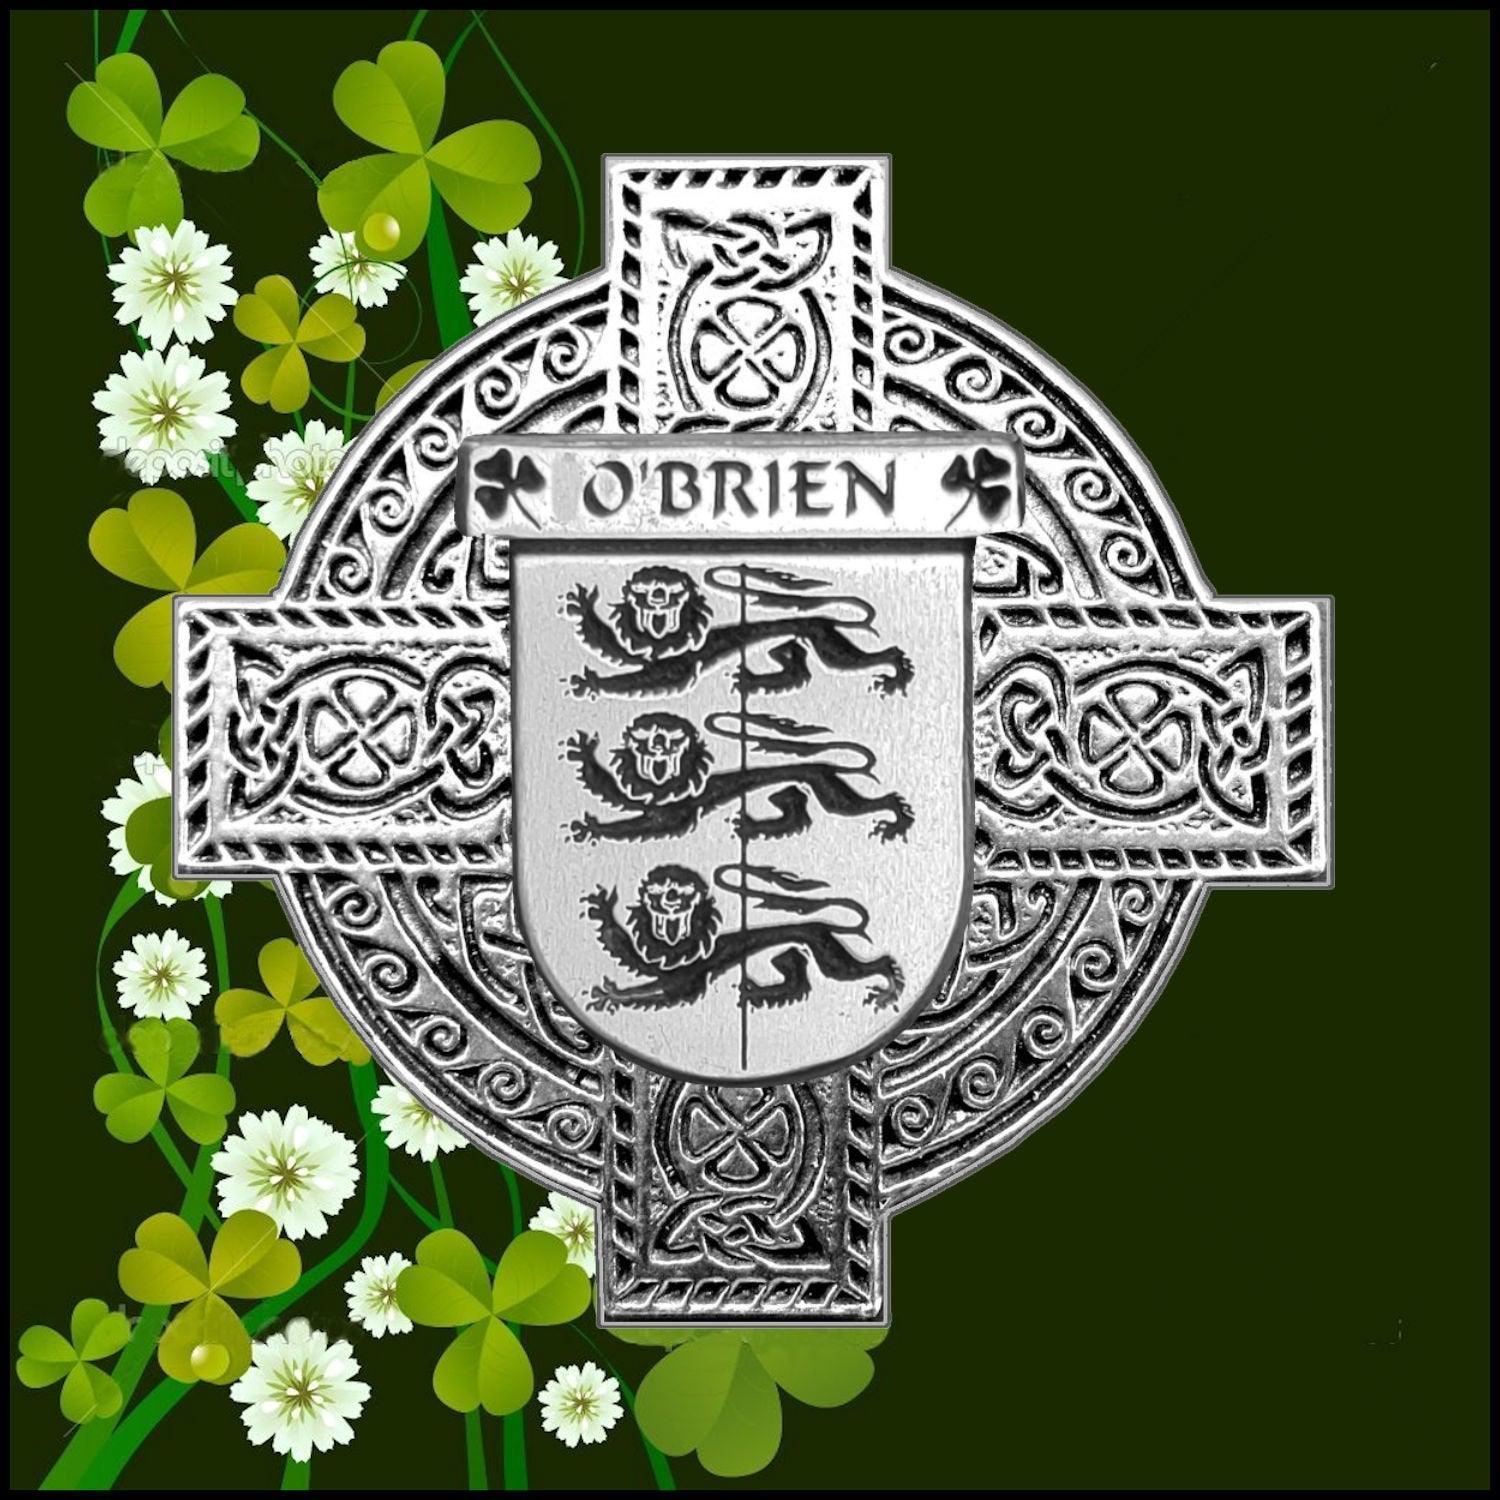 O'Brien Irish Family Coat Of Arms Celtic Cross Badge